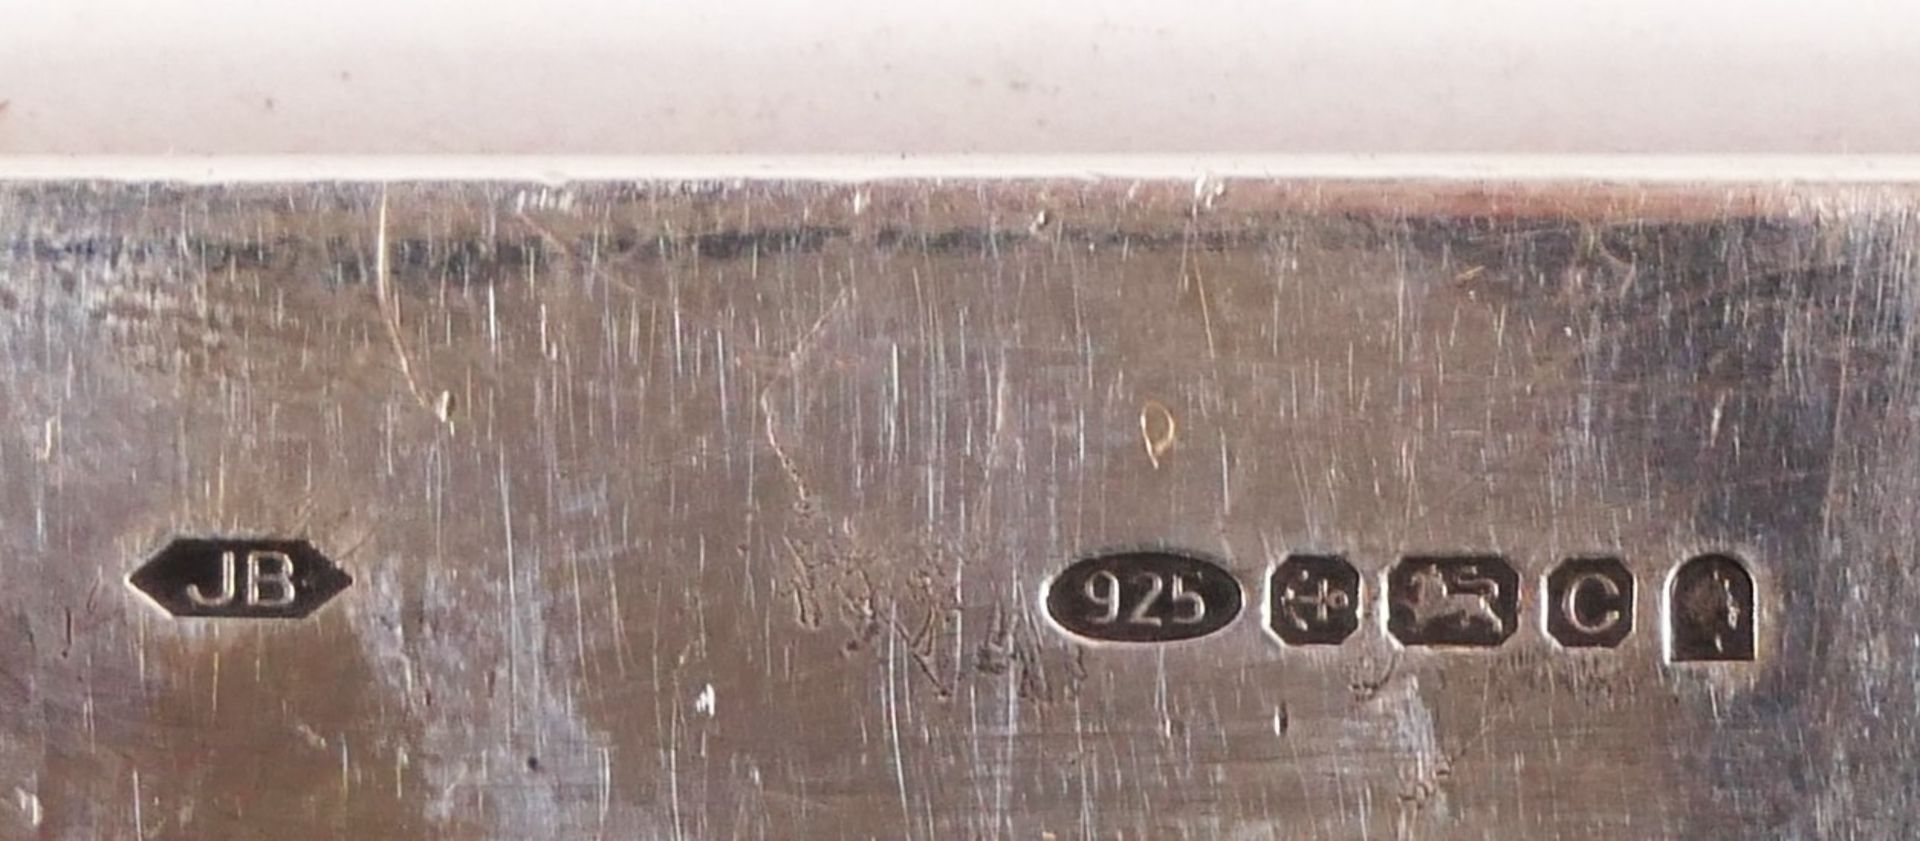 Of Morgan +8 interest; a handmade silver and unhallmarked gold belt buckle, Birmingham 2002, - Image 2 of 2